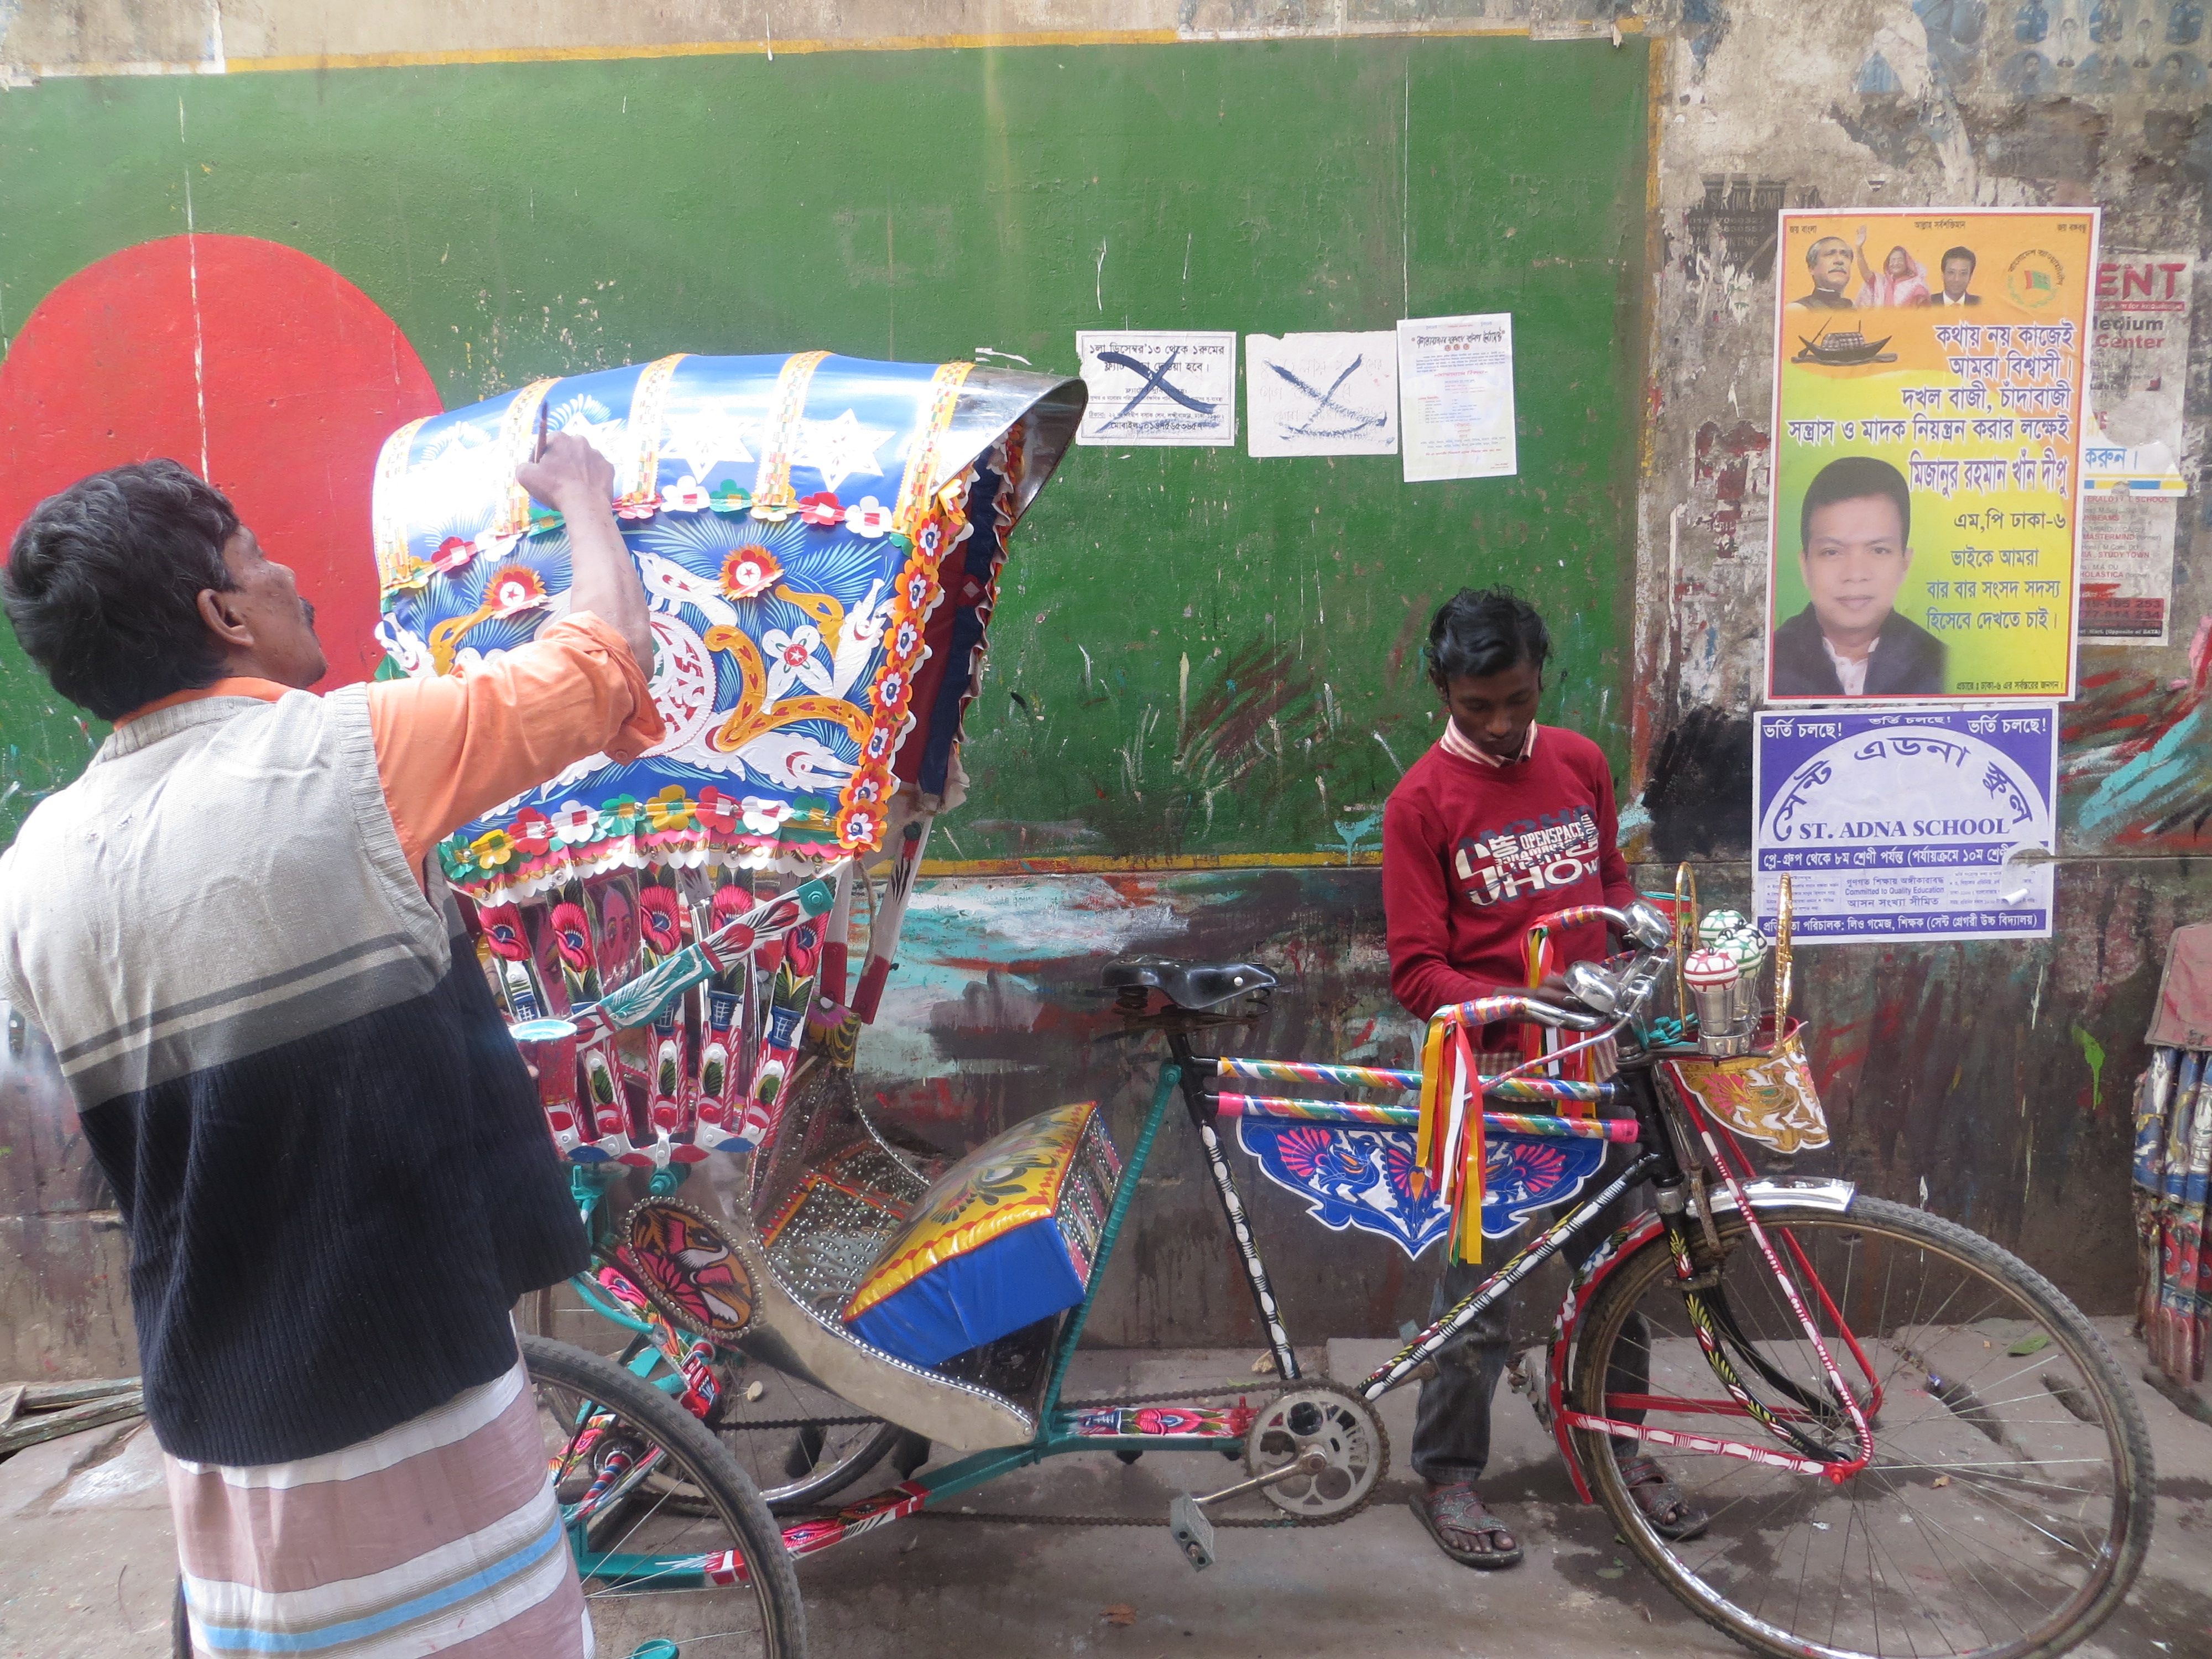 Rickshaw_artists_dhaka_flag_on_wall